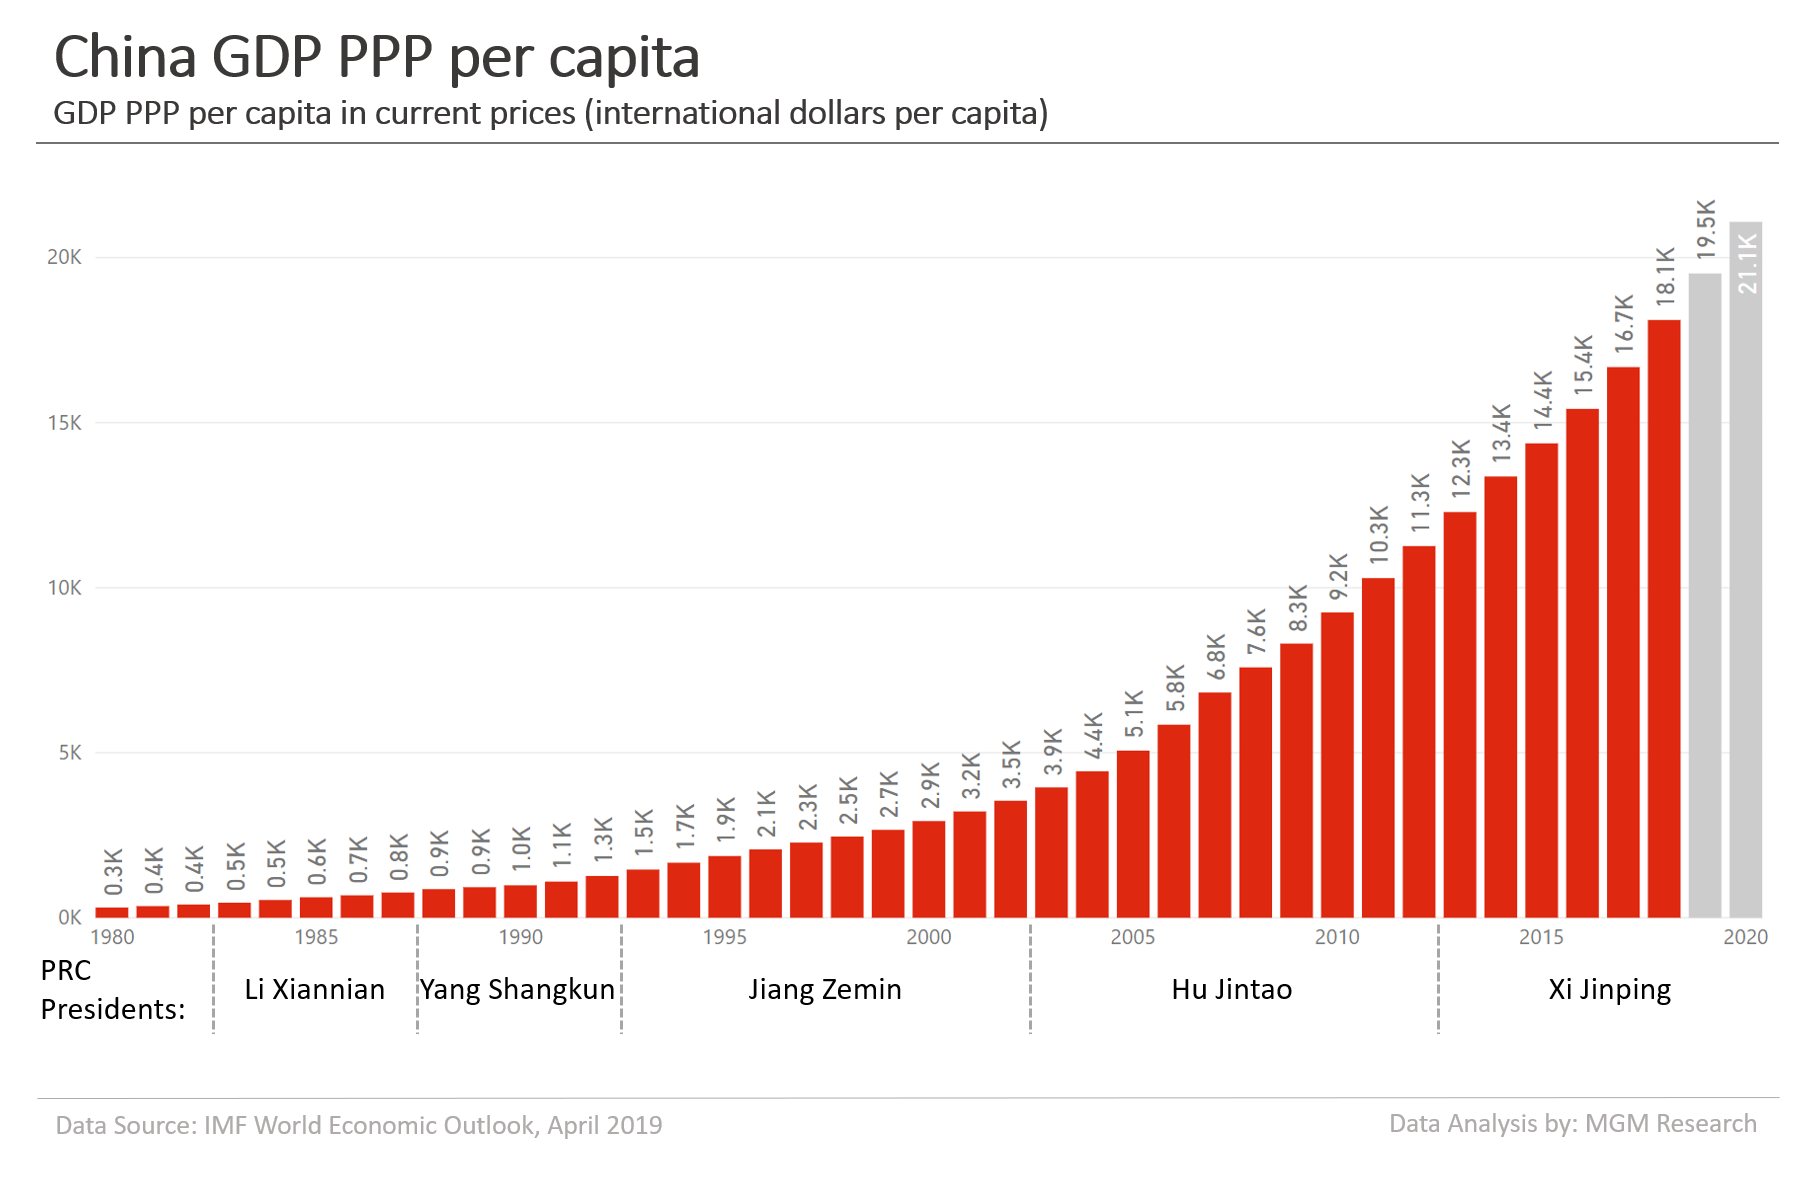 China GDP PPP per capita 1980-2020